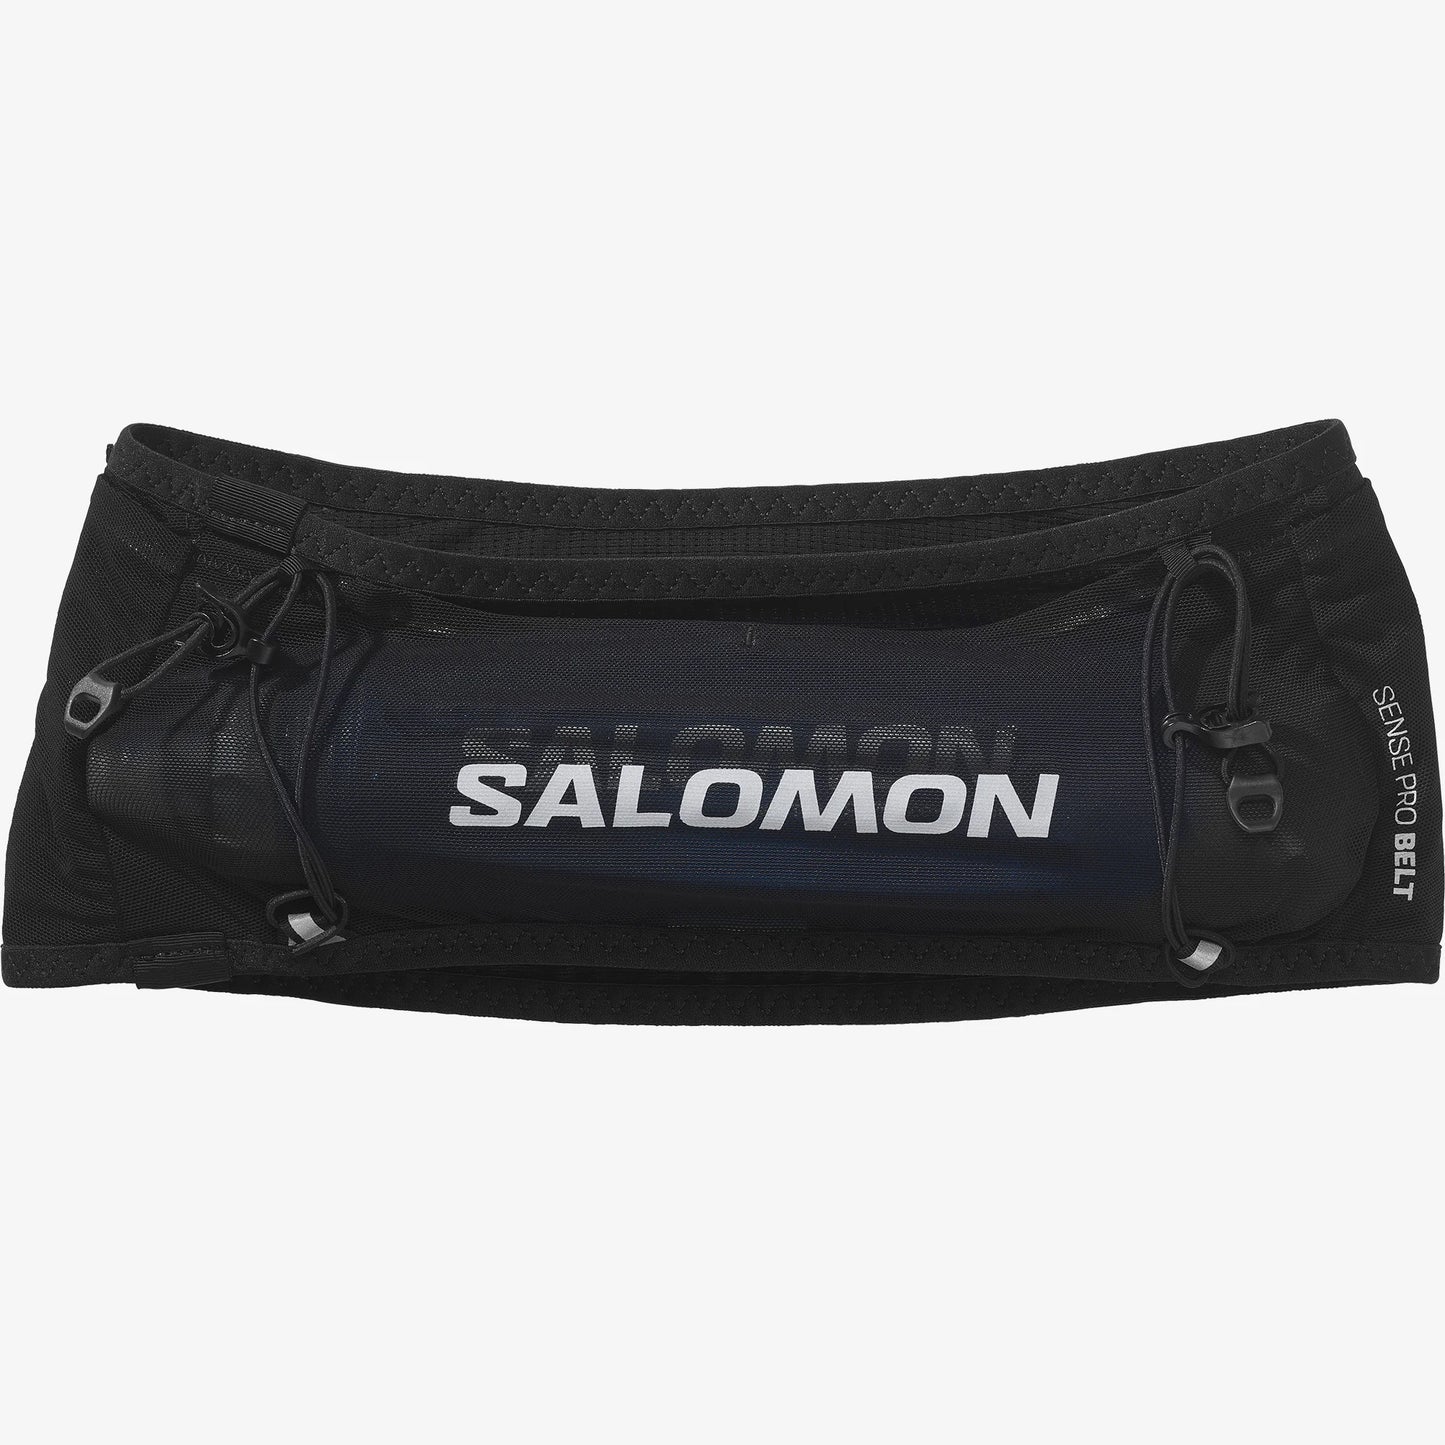 Salomon - Sense Pro - black - unisex running belt